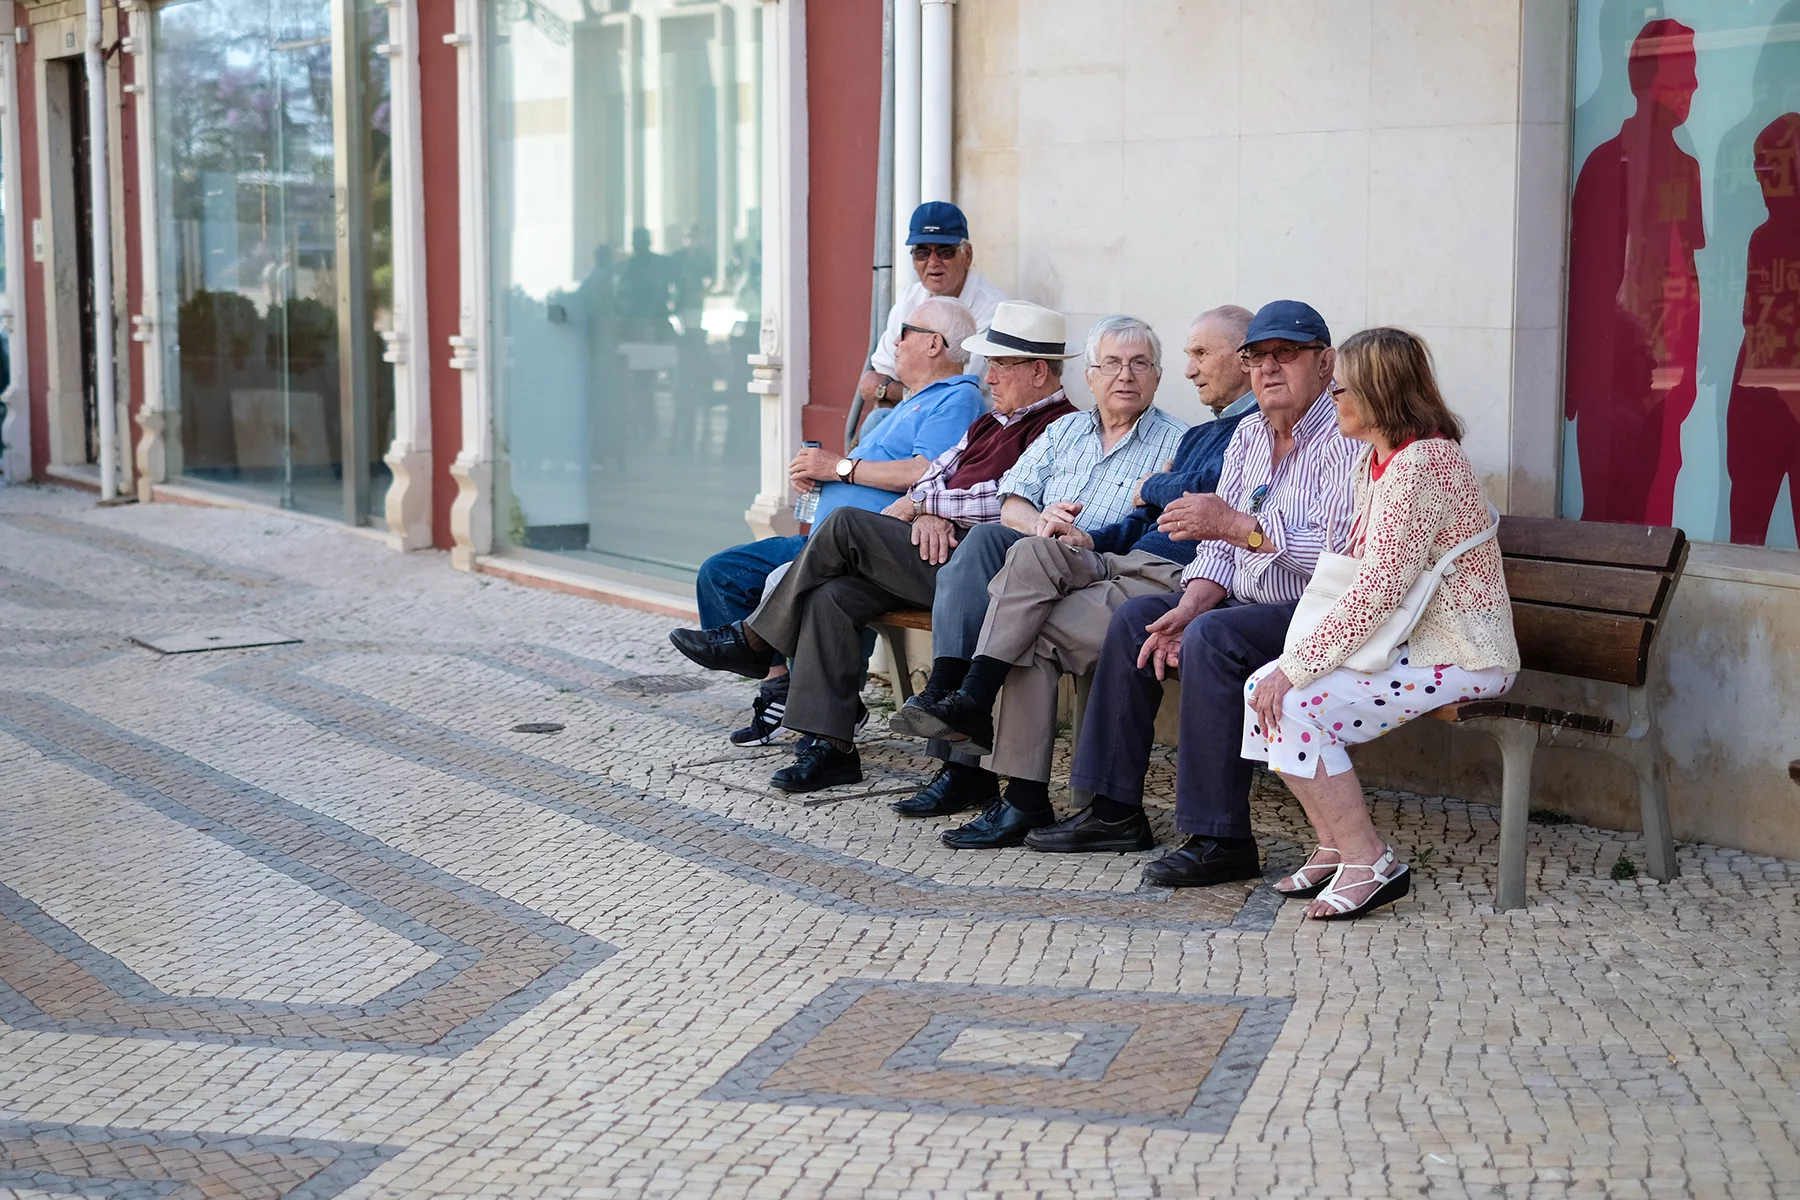 Portuguese pension system